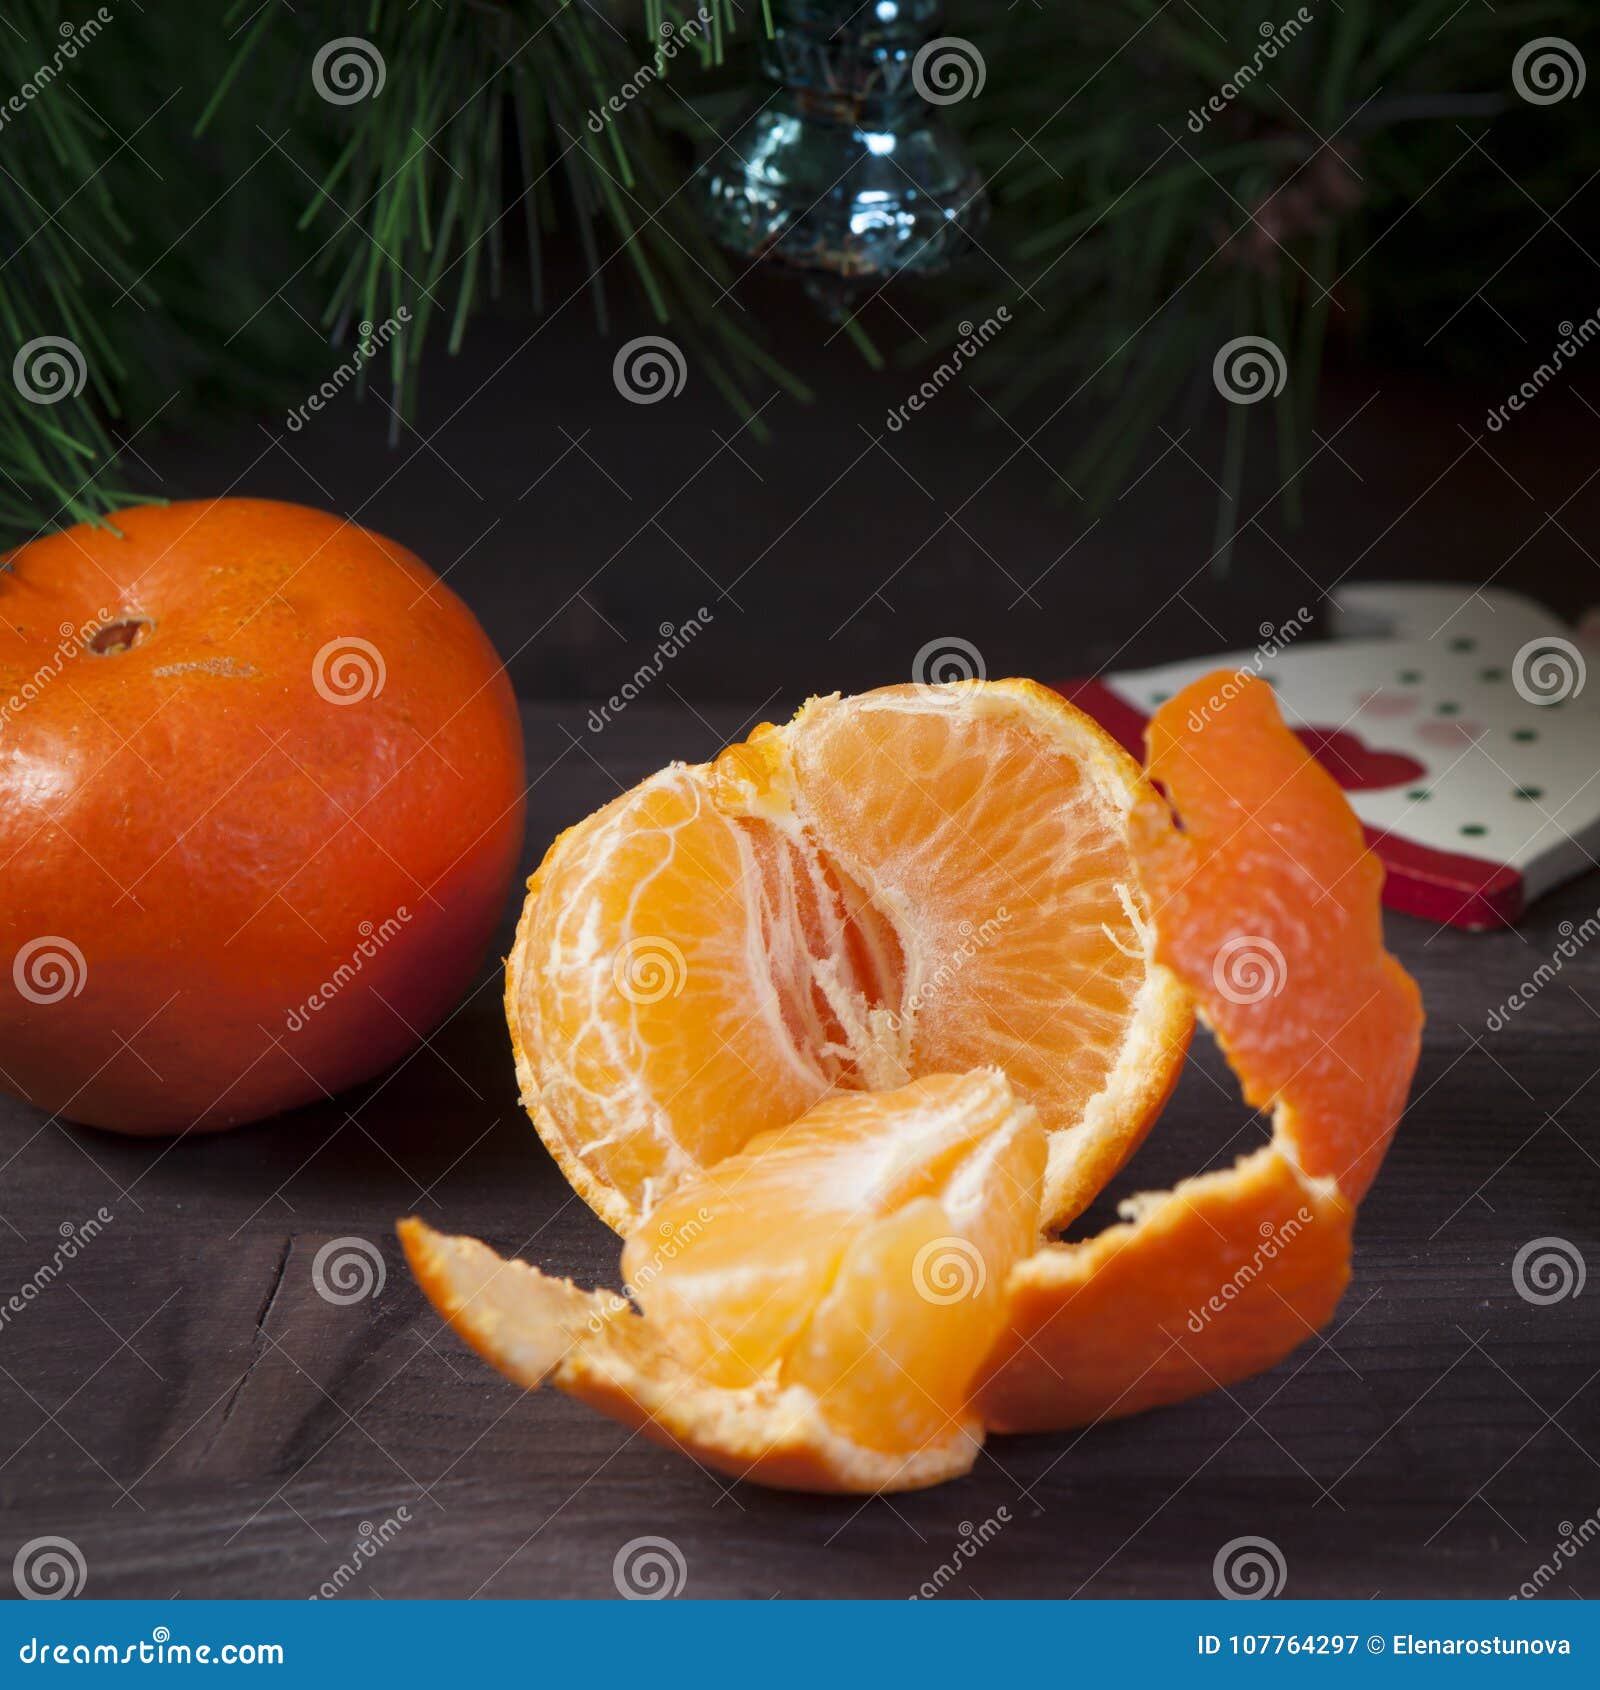 В пакете лежала мандарина. Полуочищенный мандарин. Мандарины лежат на столе. Мандарин на столе полуочищенный. Апельсин полуочищенный.